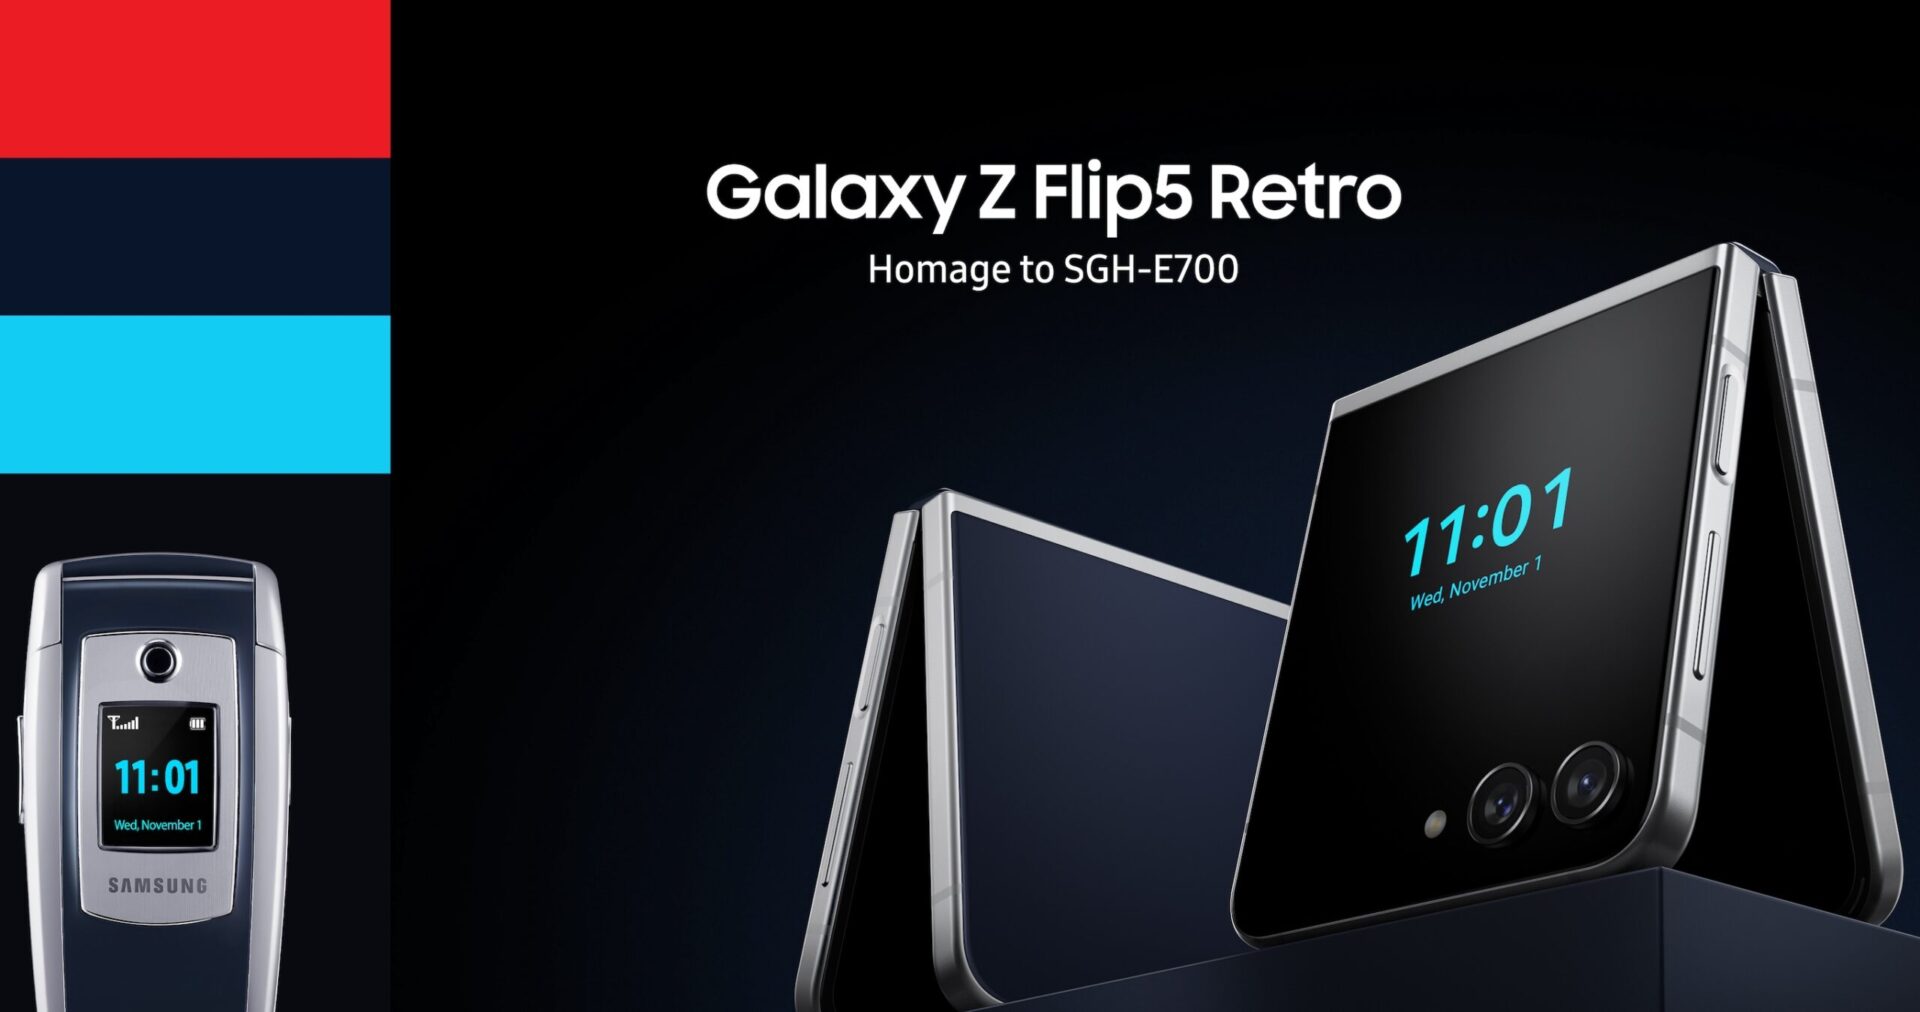 Galaxy Z Flip 5 Retro hylder den klassiske klapmobil